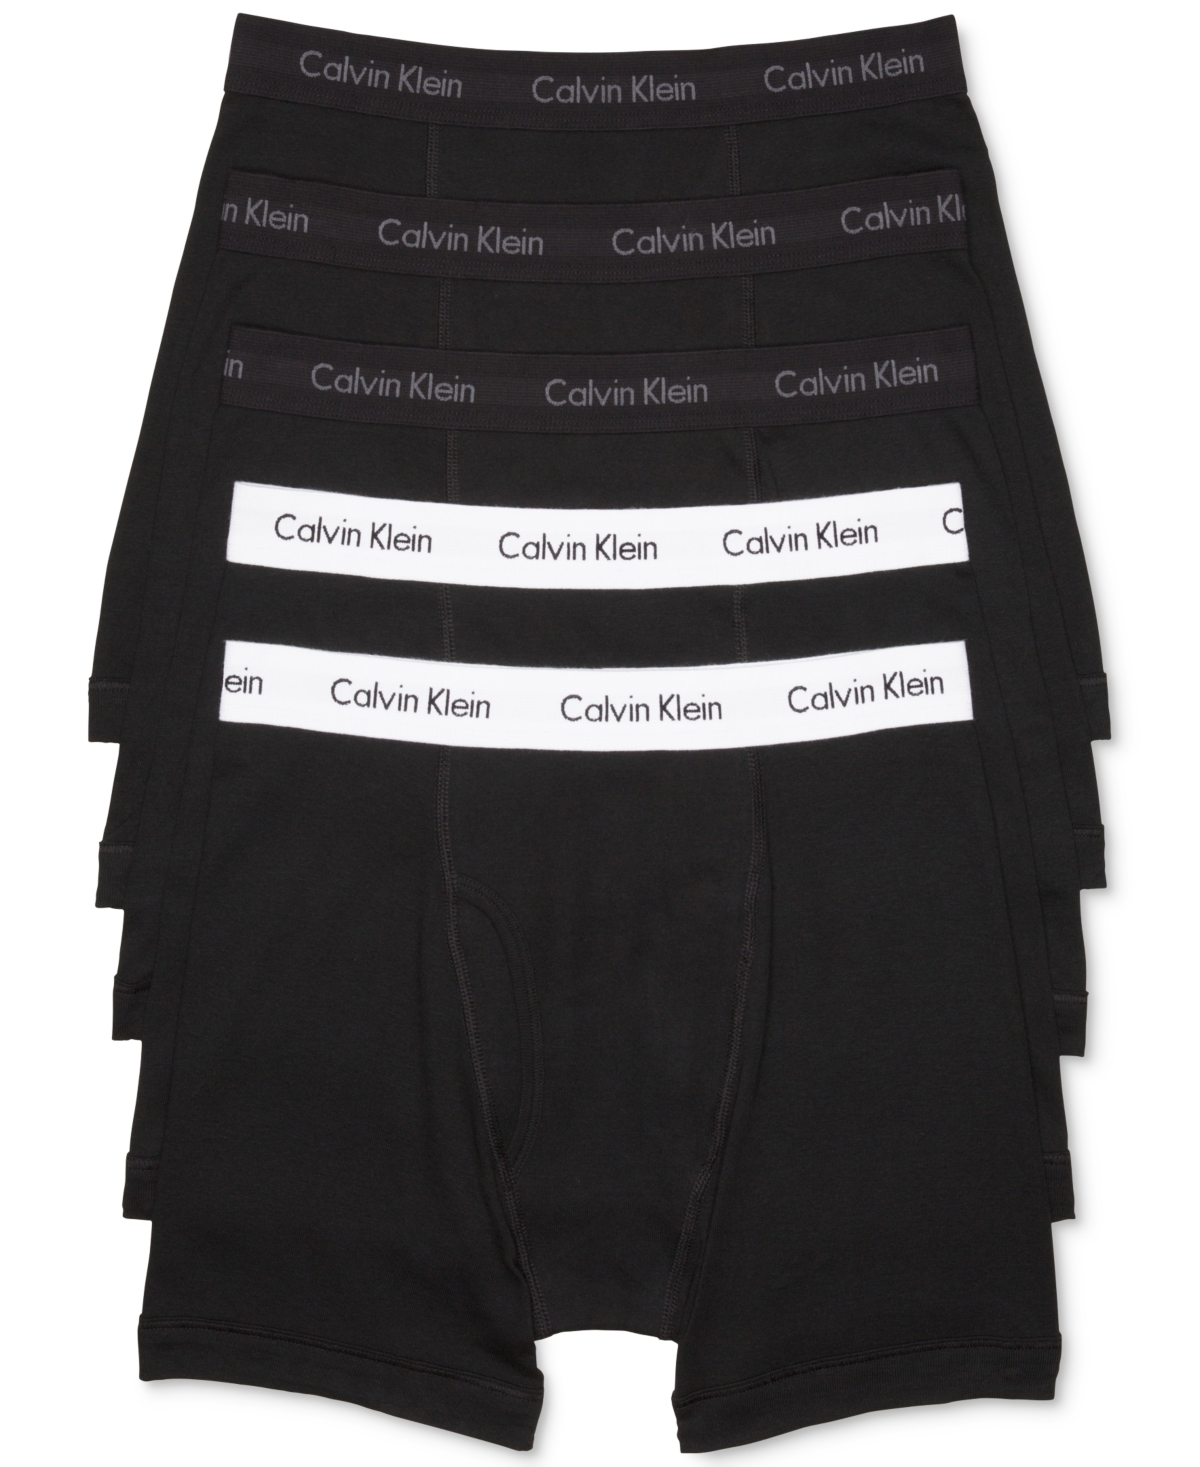 Calvin Klein Men's 5-pack Cotton Classic Boxer Briefs Underwear In All Black,black With White Waistband